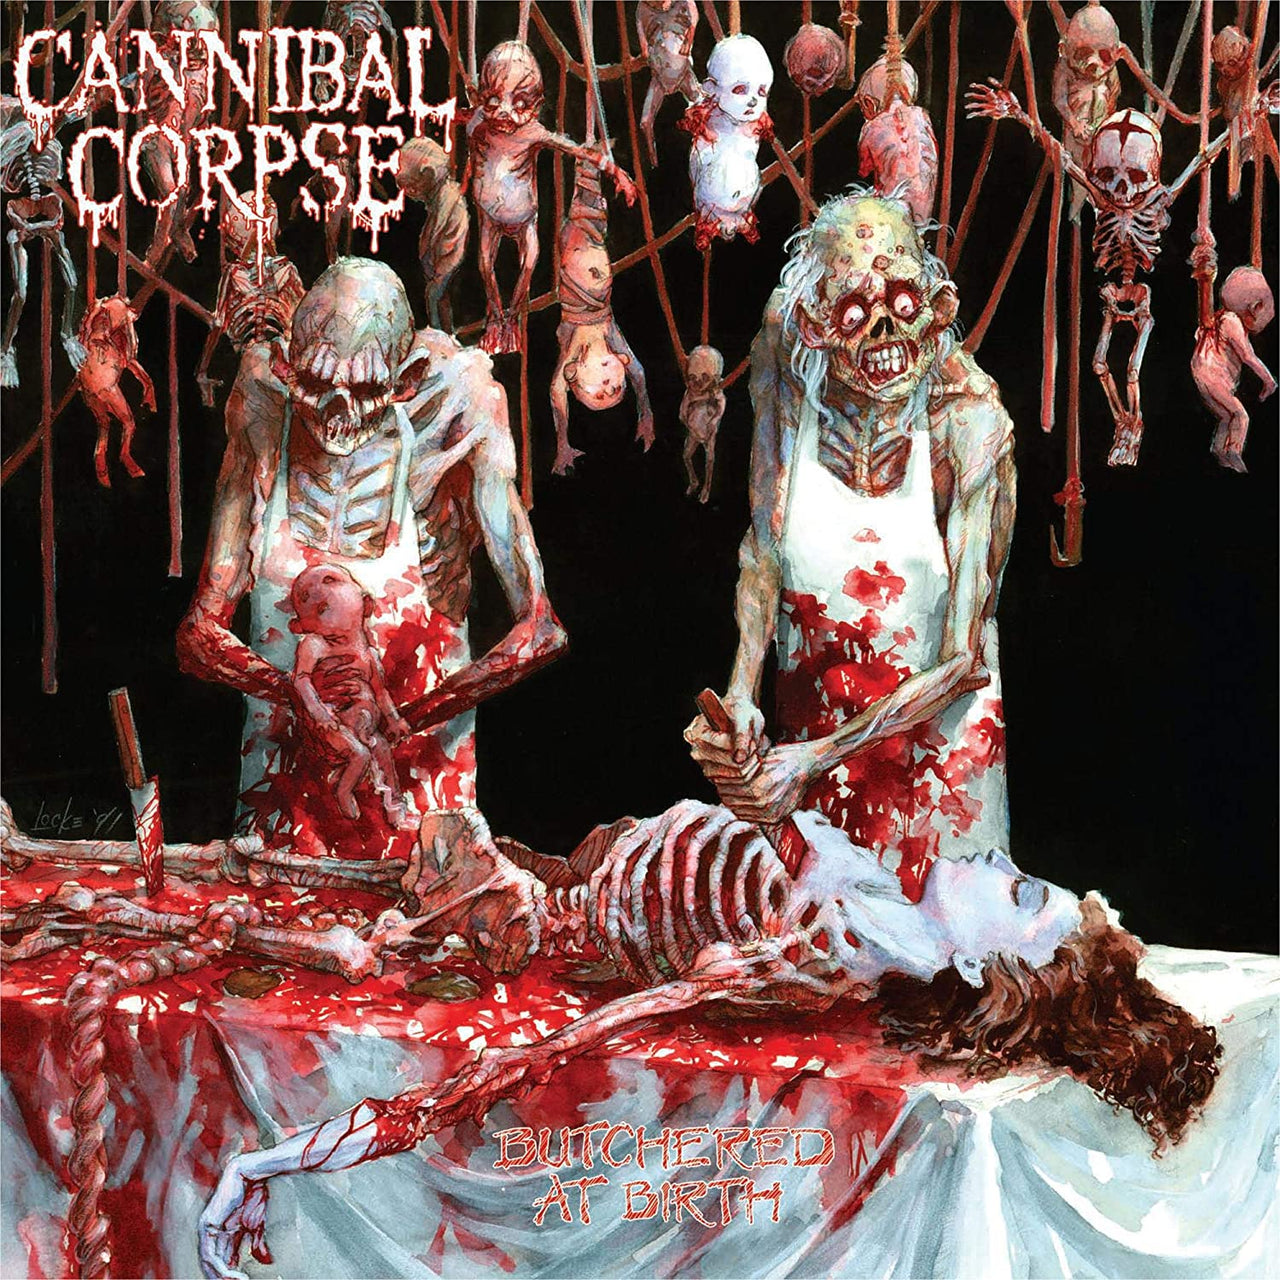 Cannibal Corpse "Butchered At Birth" 12" Vinyl